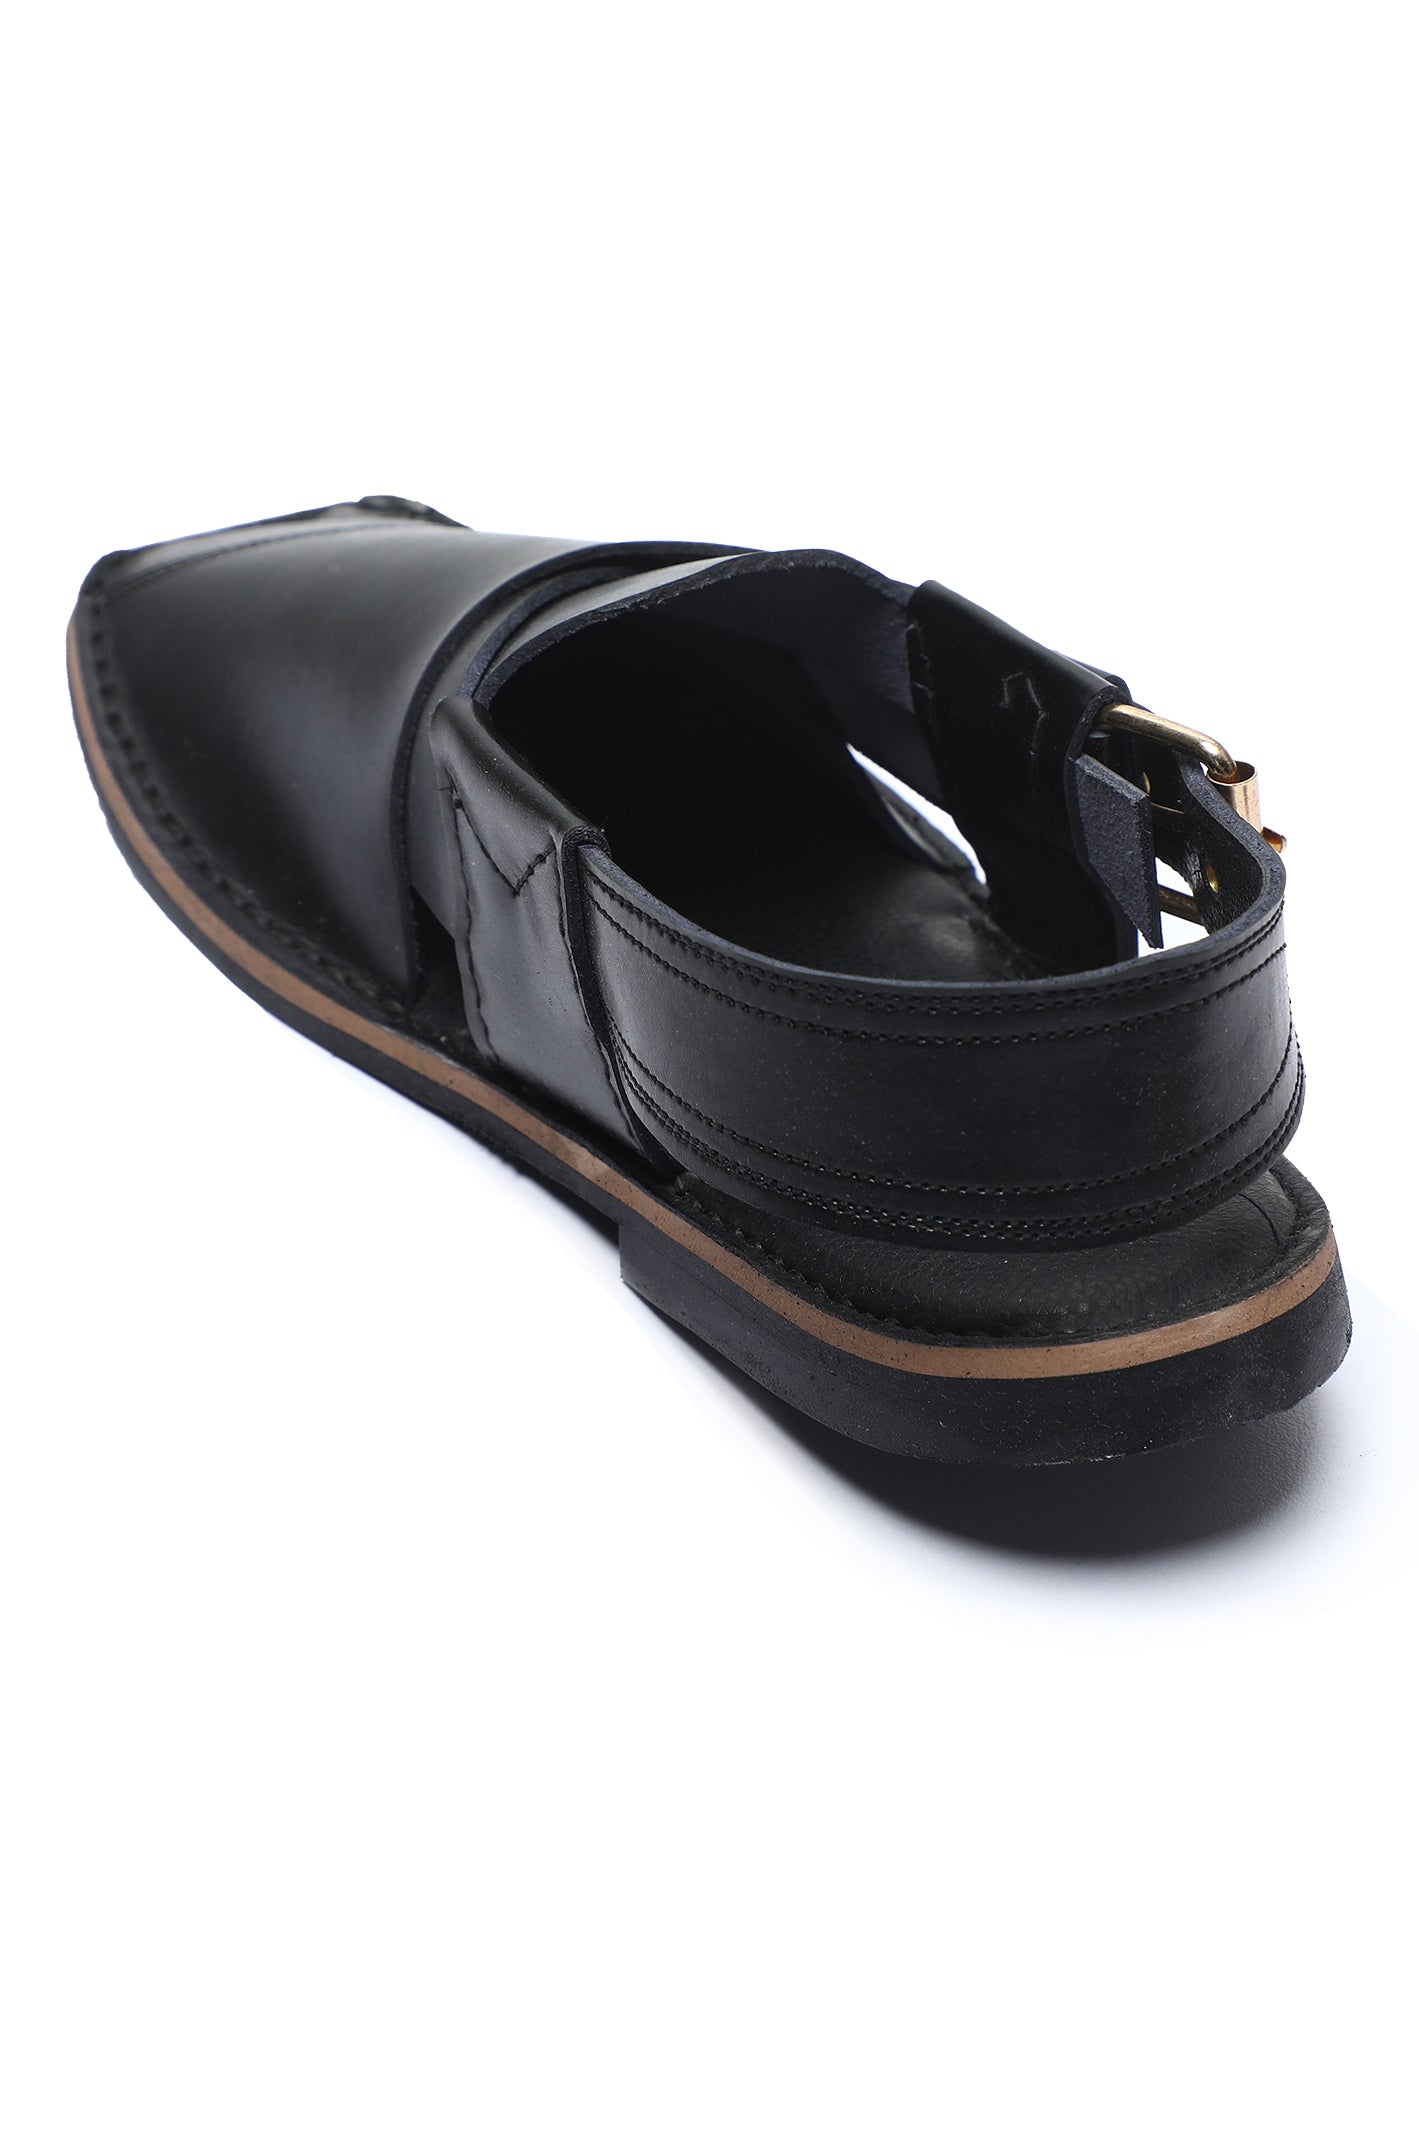 French Emporio Men's Sandal SKU: PSLD-0046-BLACK - Diners